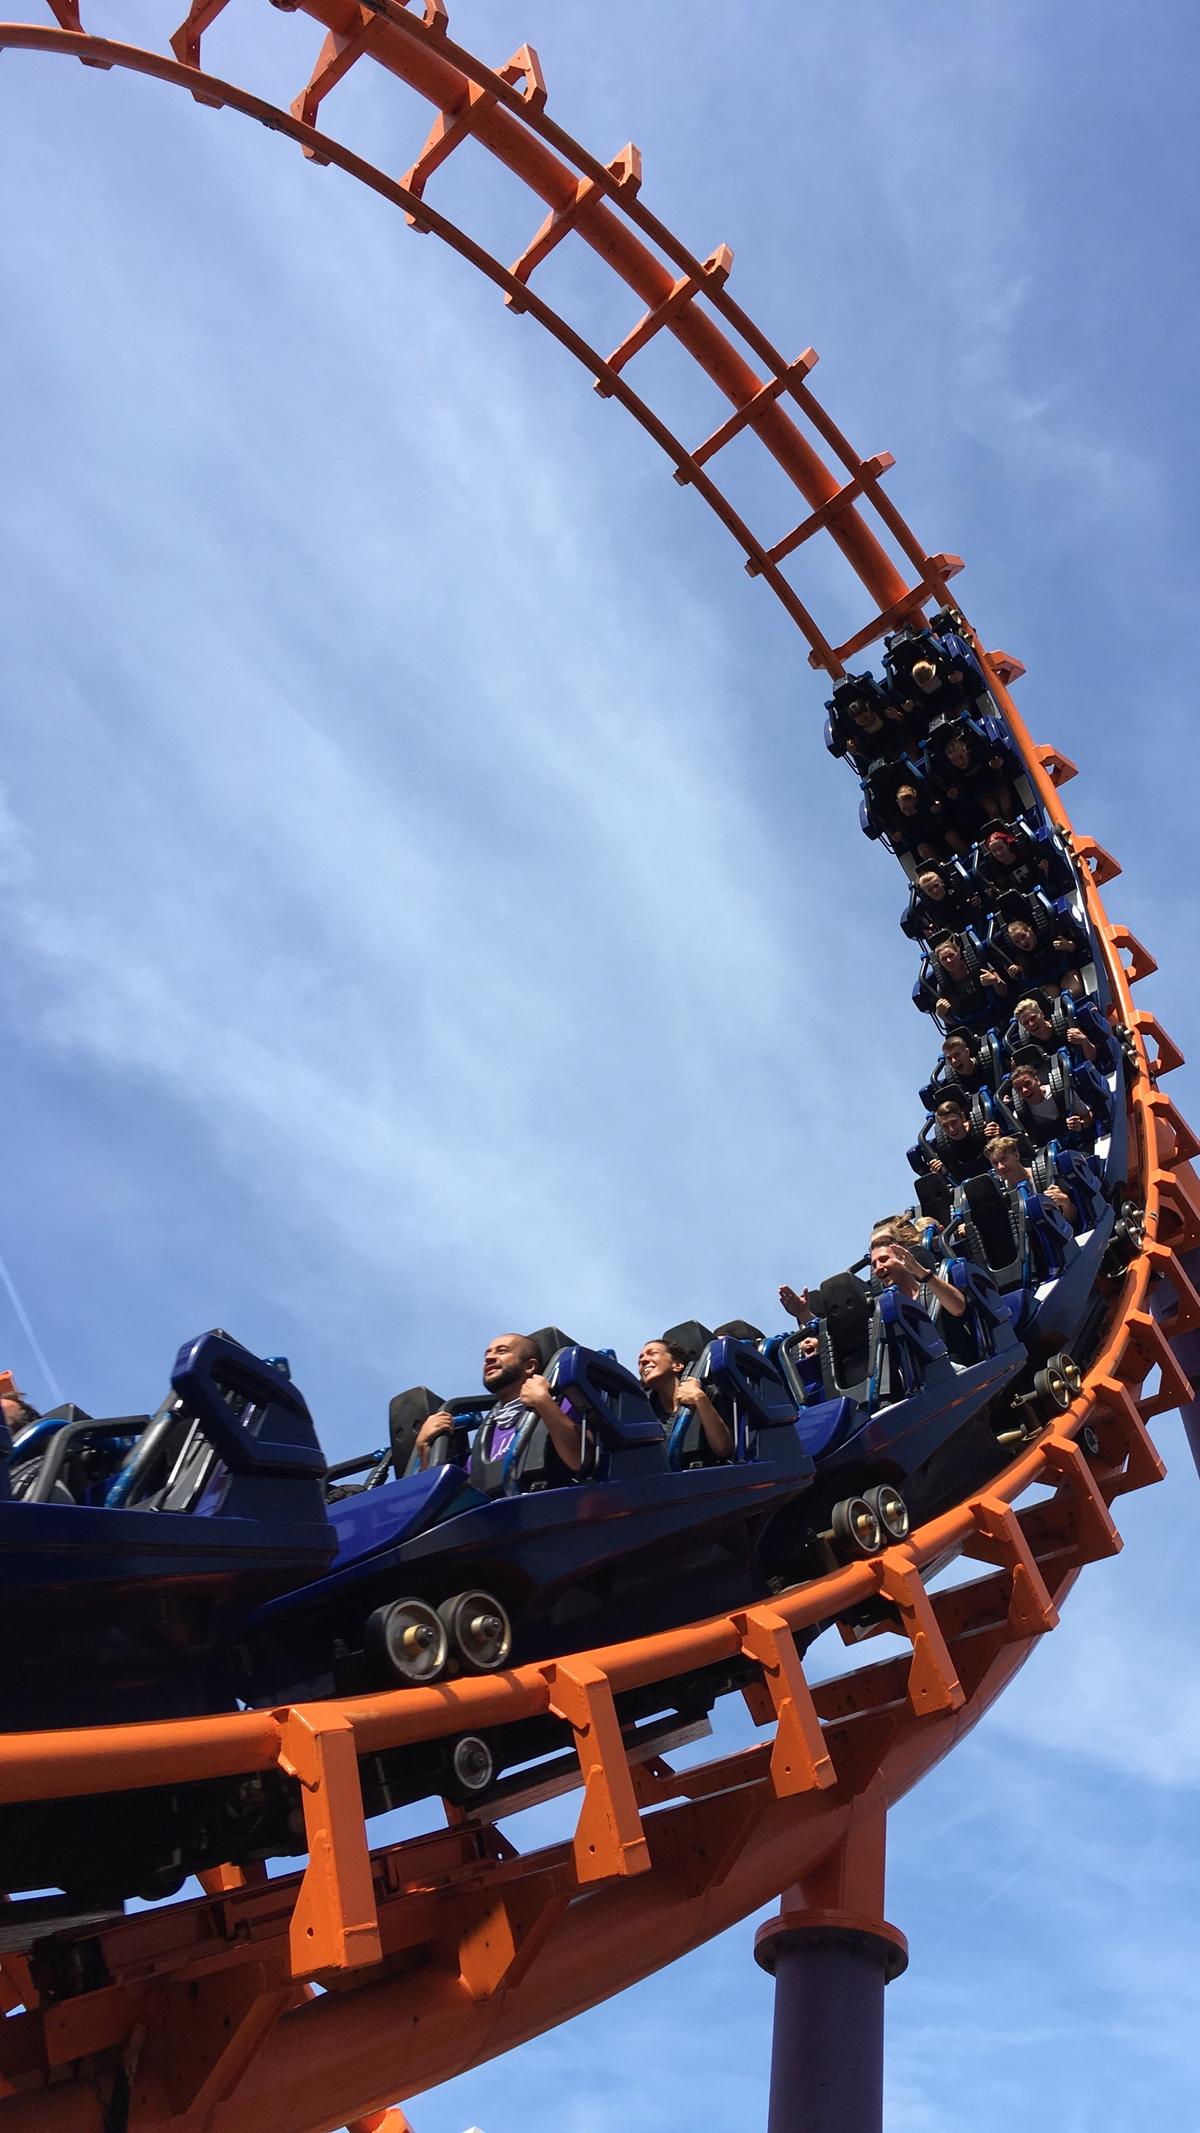 An image of a roller coaster ride in LEGOLAND California